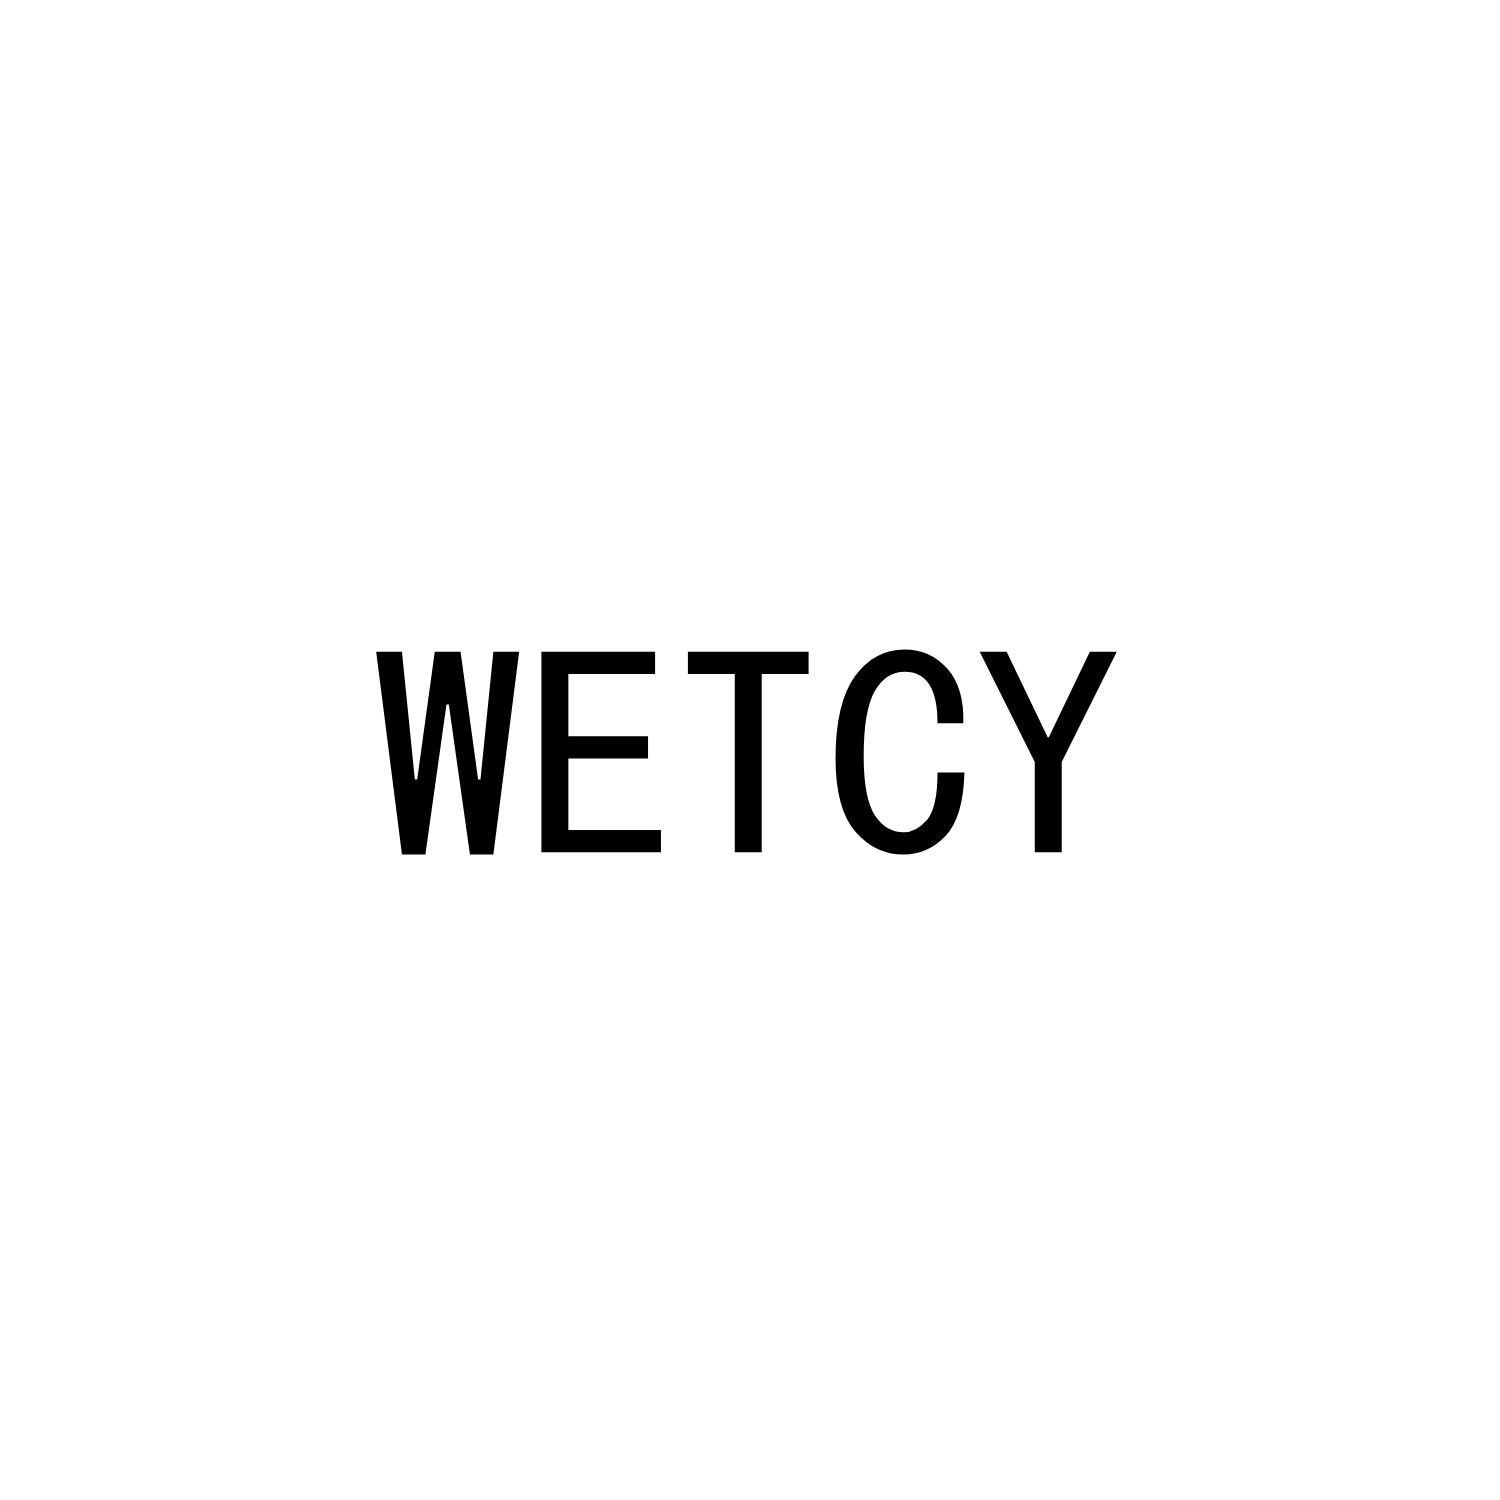 WETCY